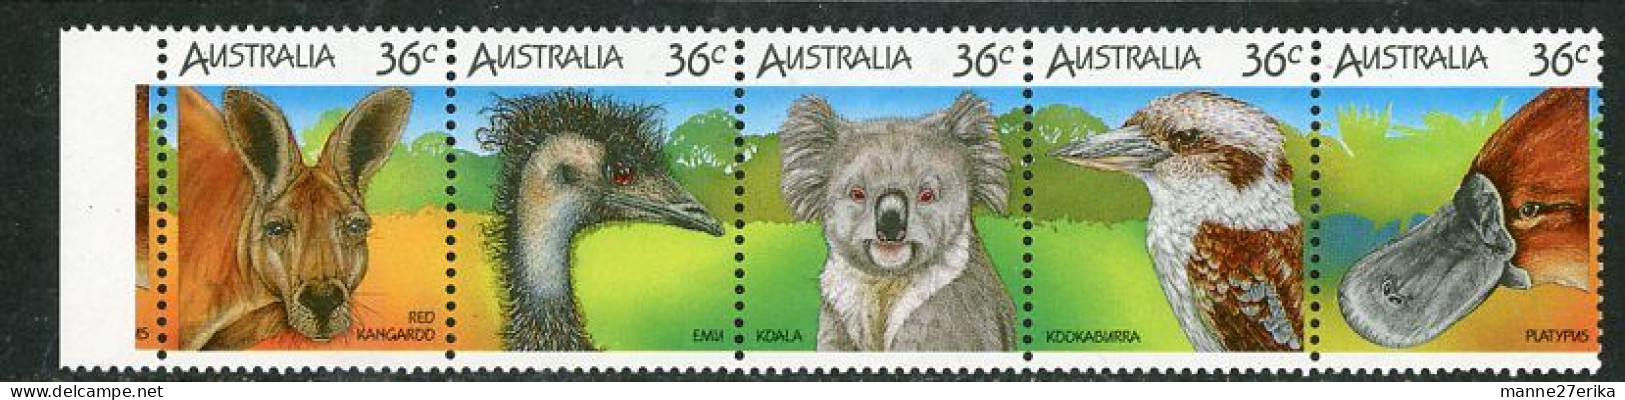 Australia MNH 1986 Wildlife - Mint Stamps